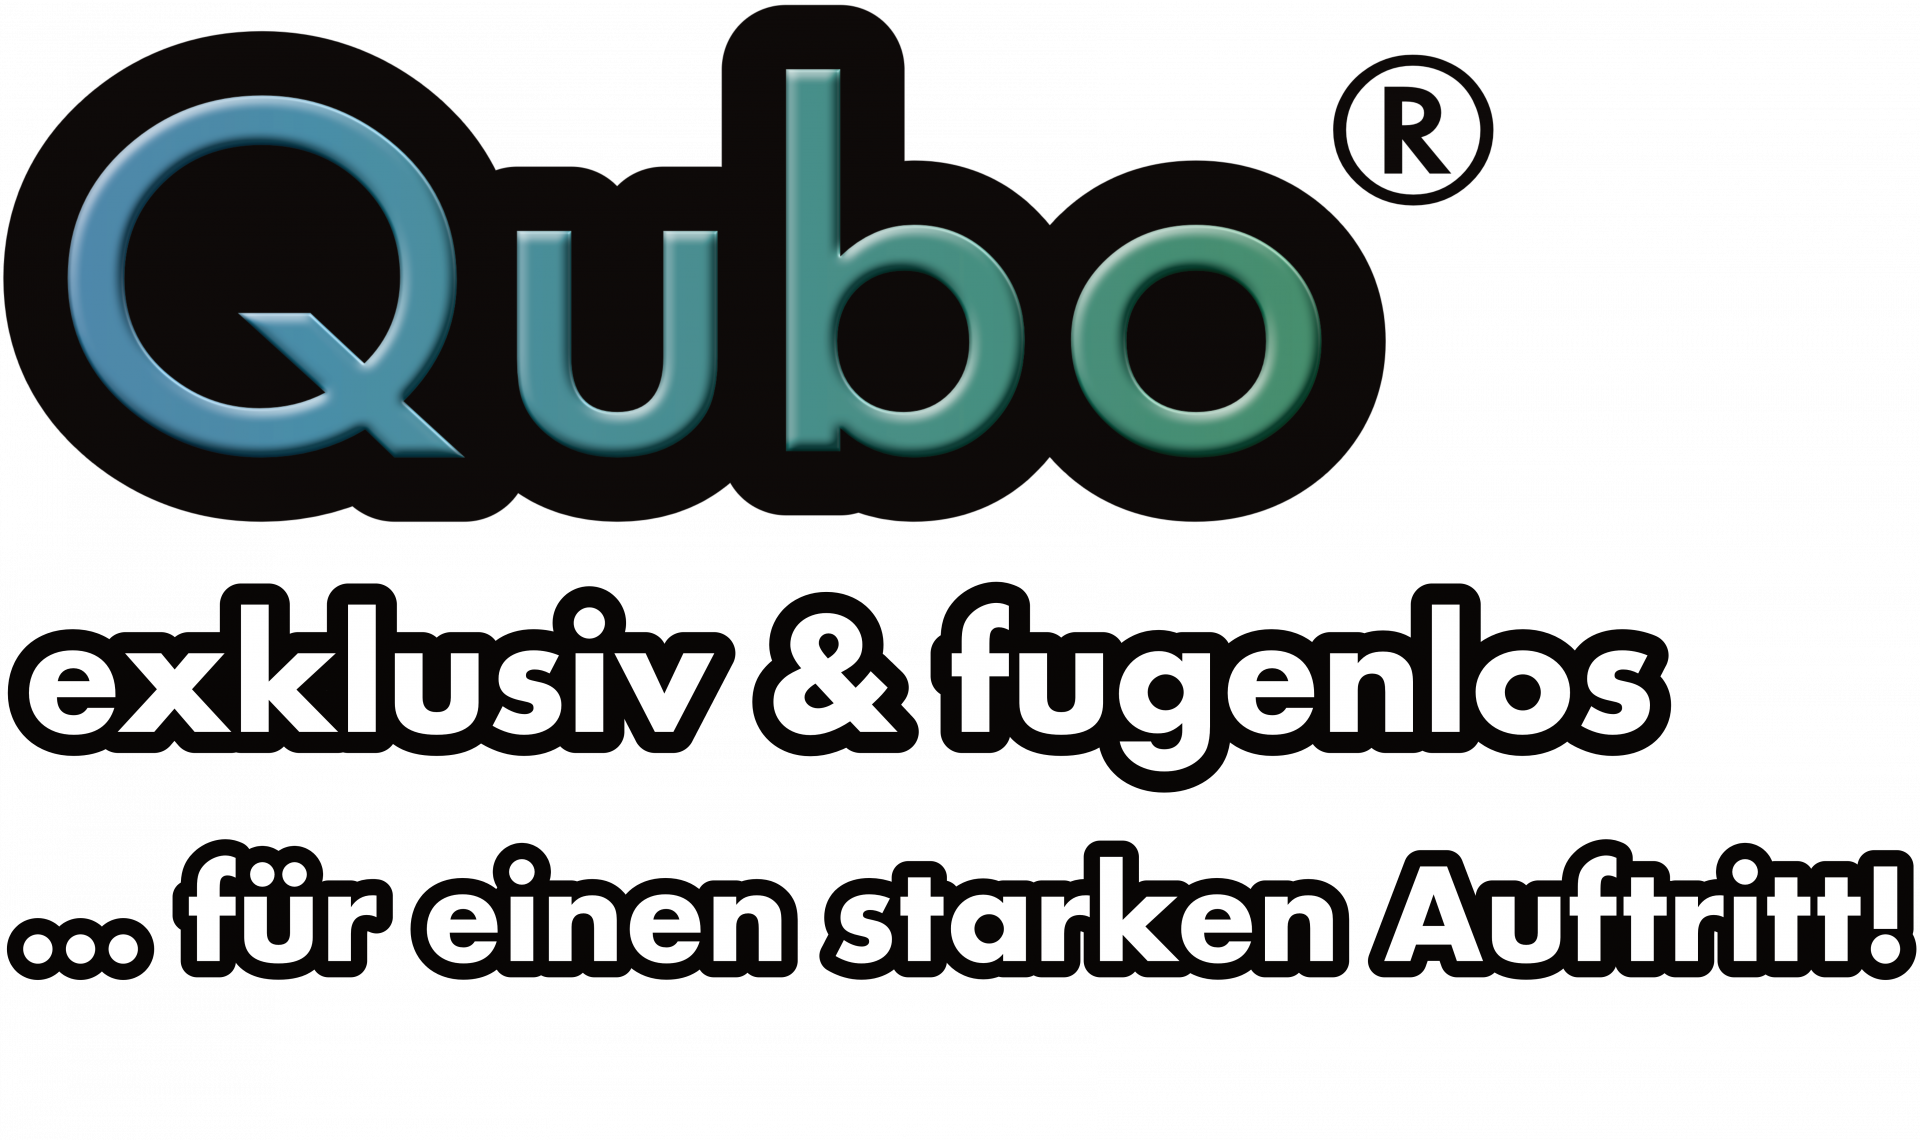 qubo-exklusiv-fugenlos-logo